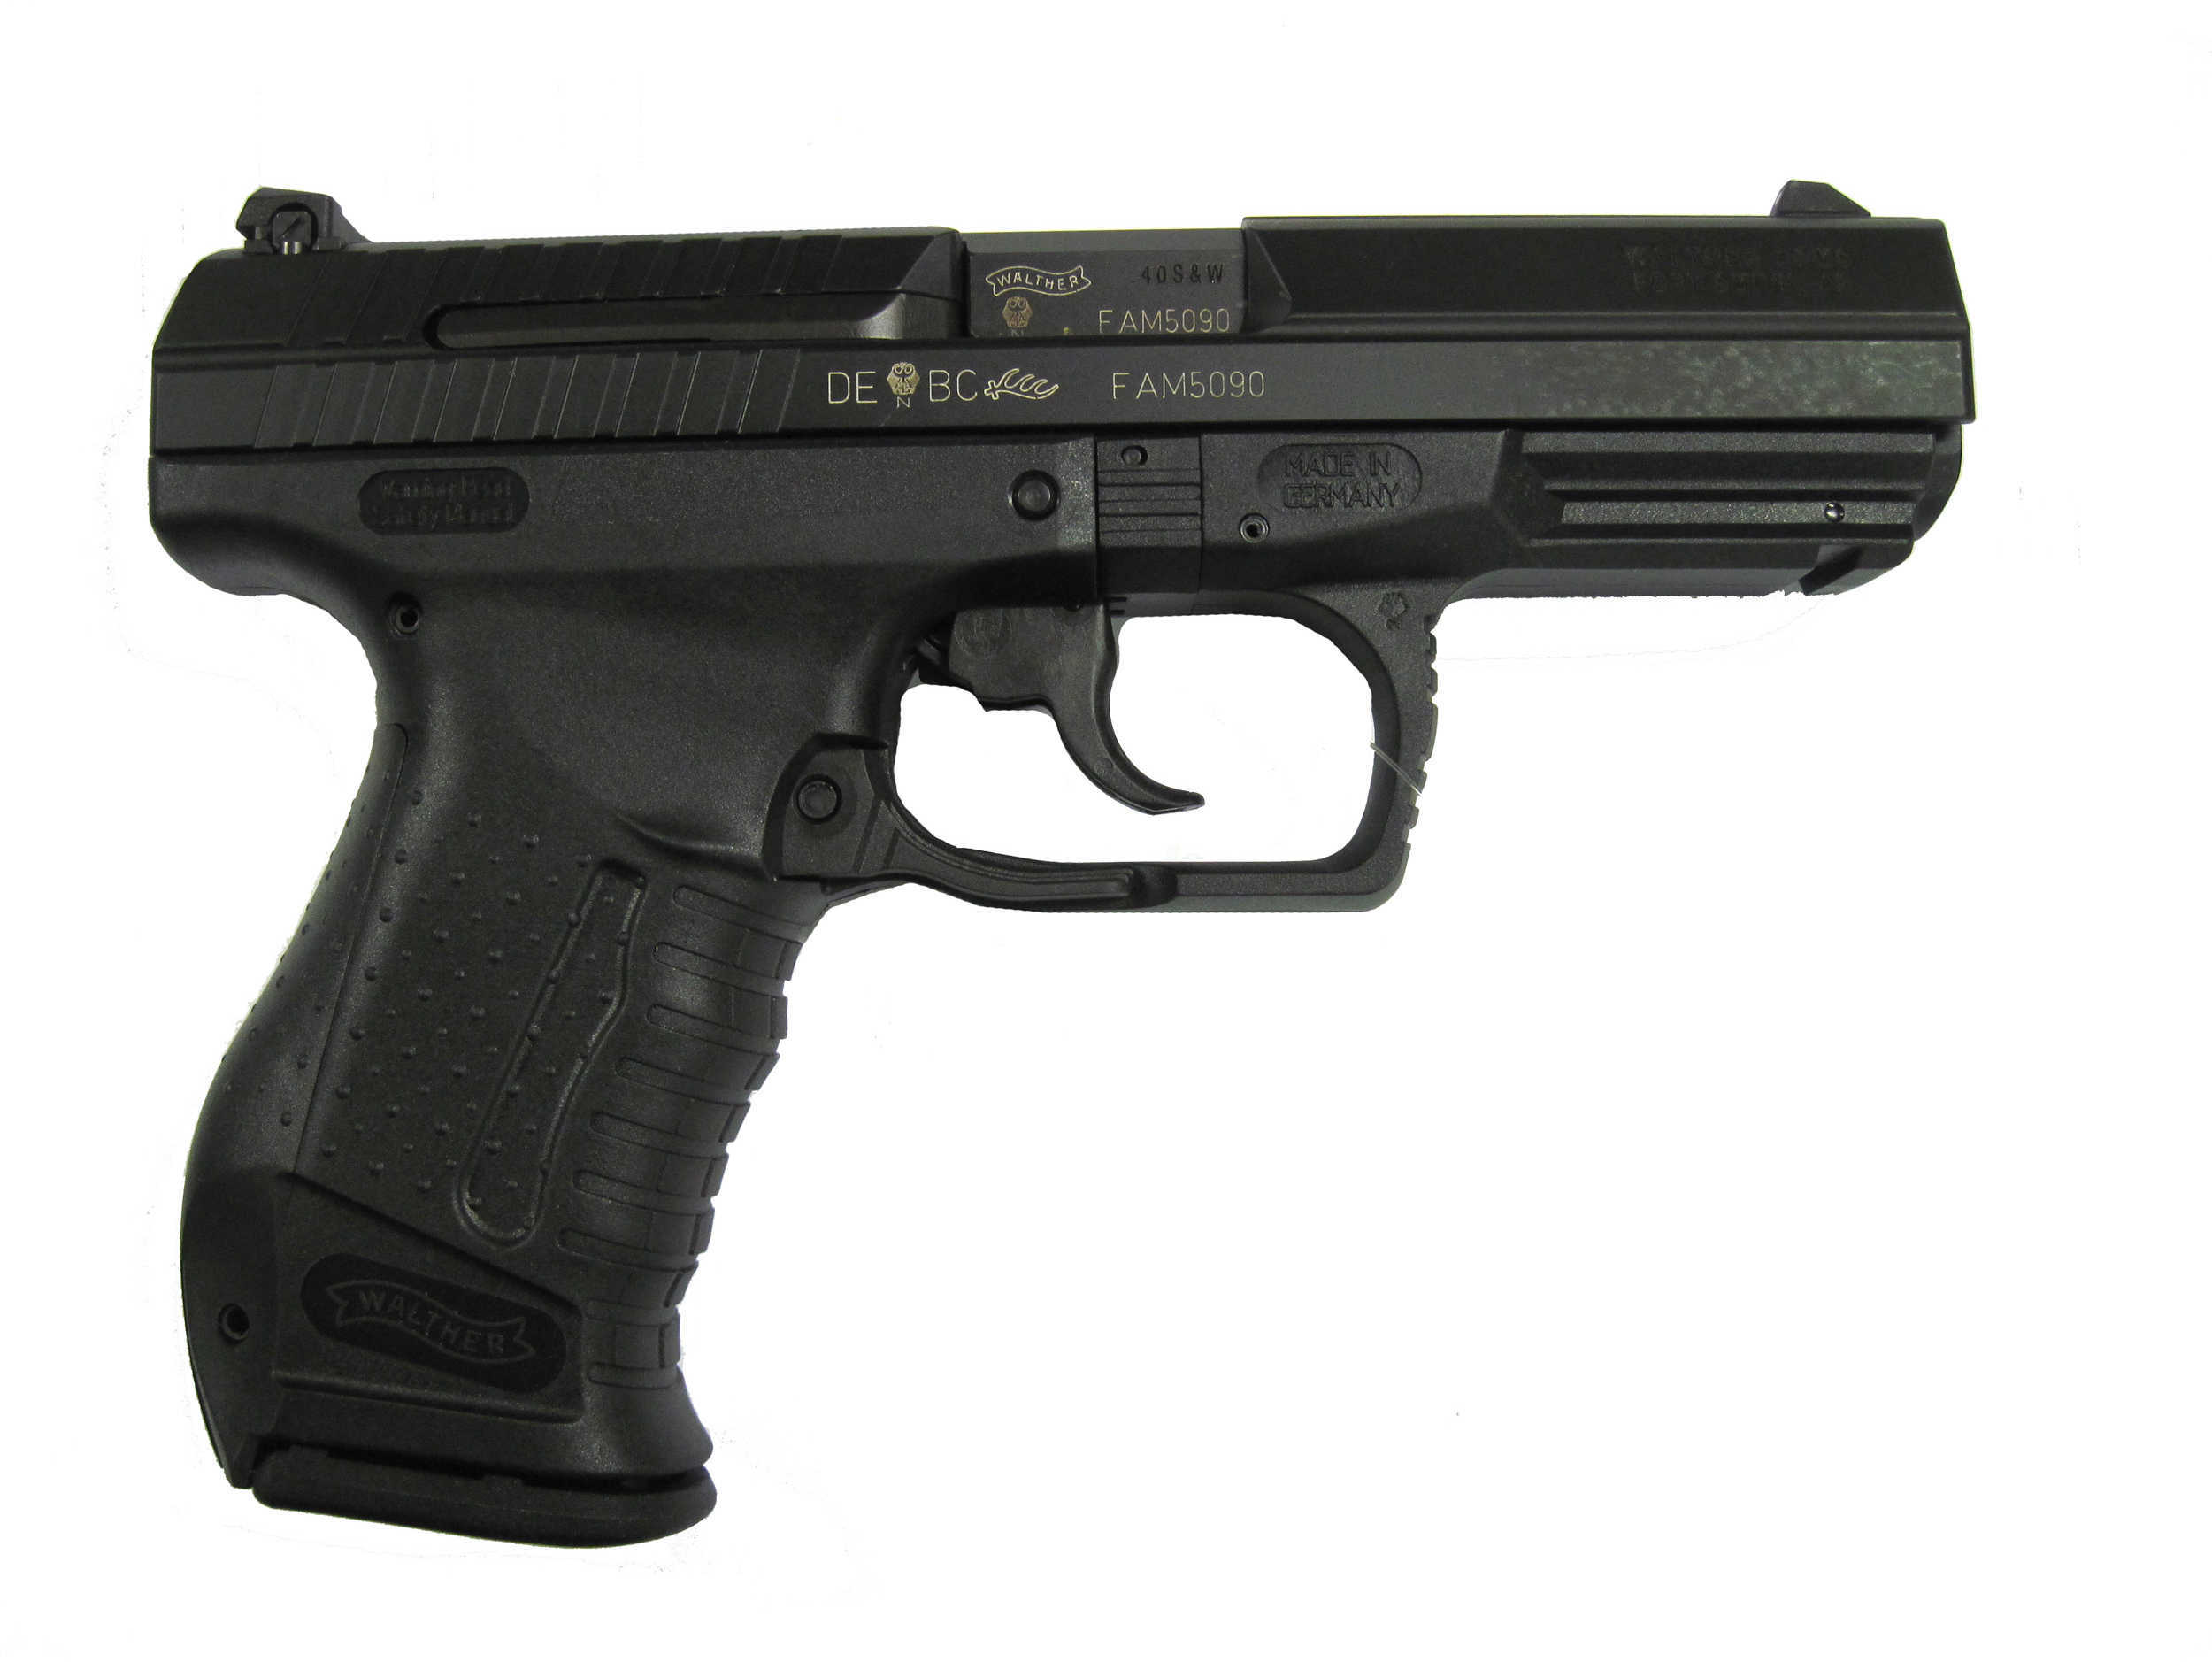 Walther P99 40 S&W 4" Barrel 12 Round Anti-Stress Mode Polymer Grips Black Semi Automatic Pistol 2796341